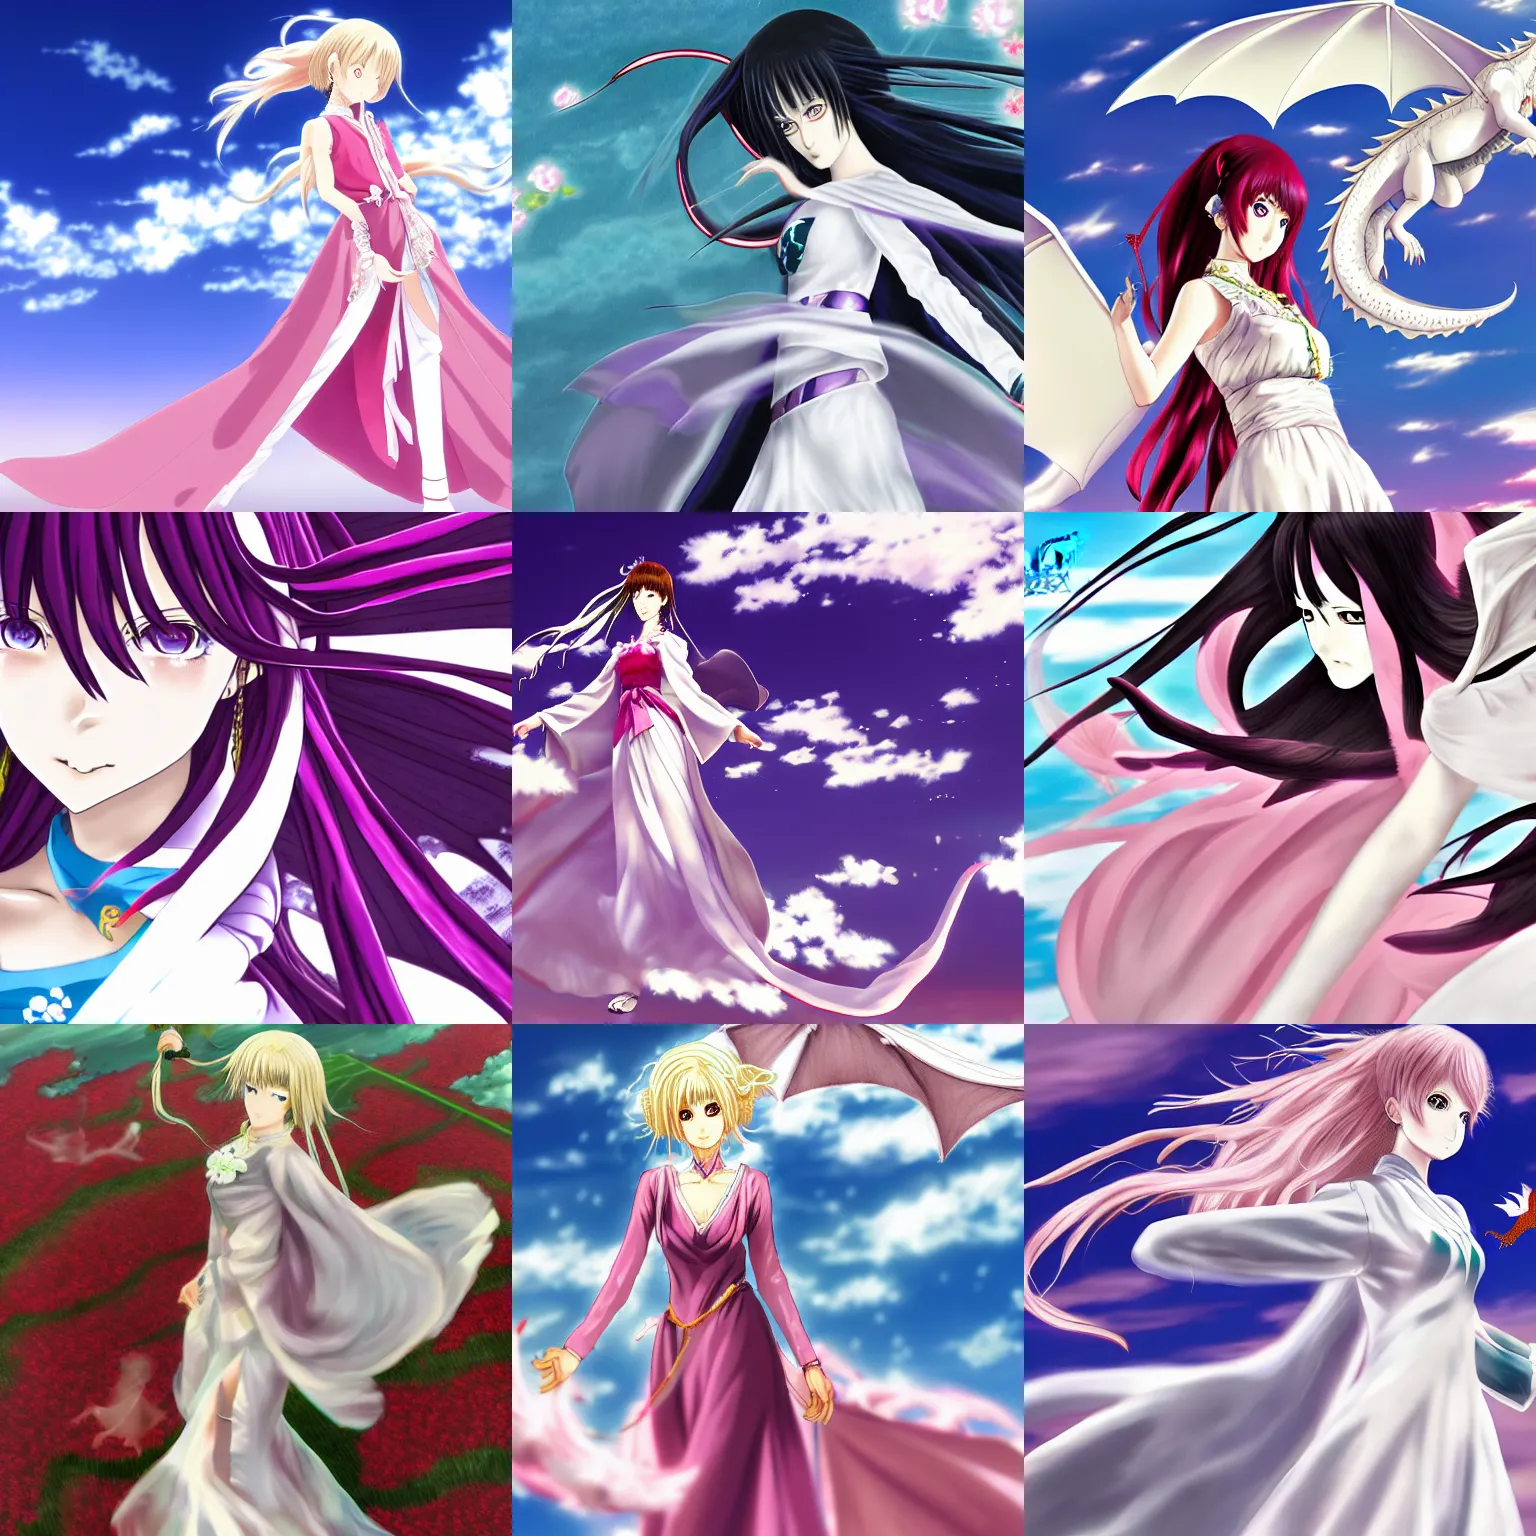 Prompt: anime girl with a white long dress flies with a dragon by hirohiko araki, pixiv digital art, 4 k